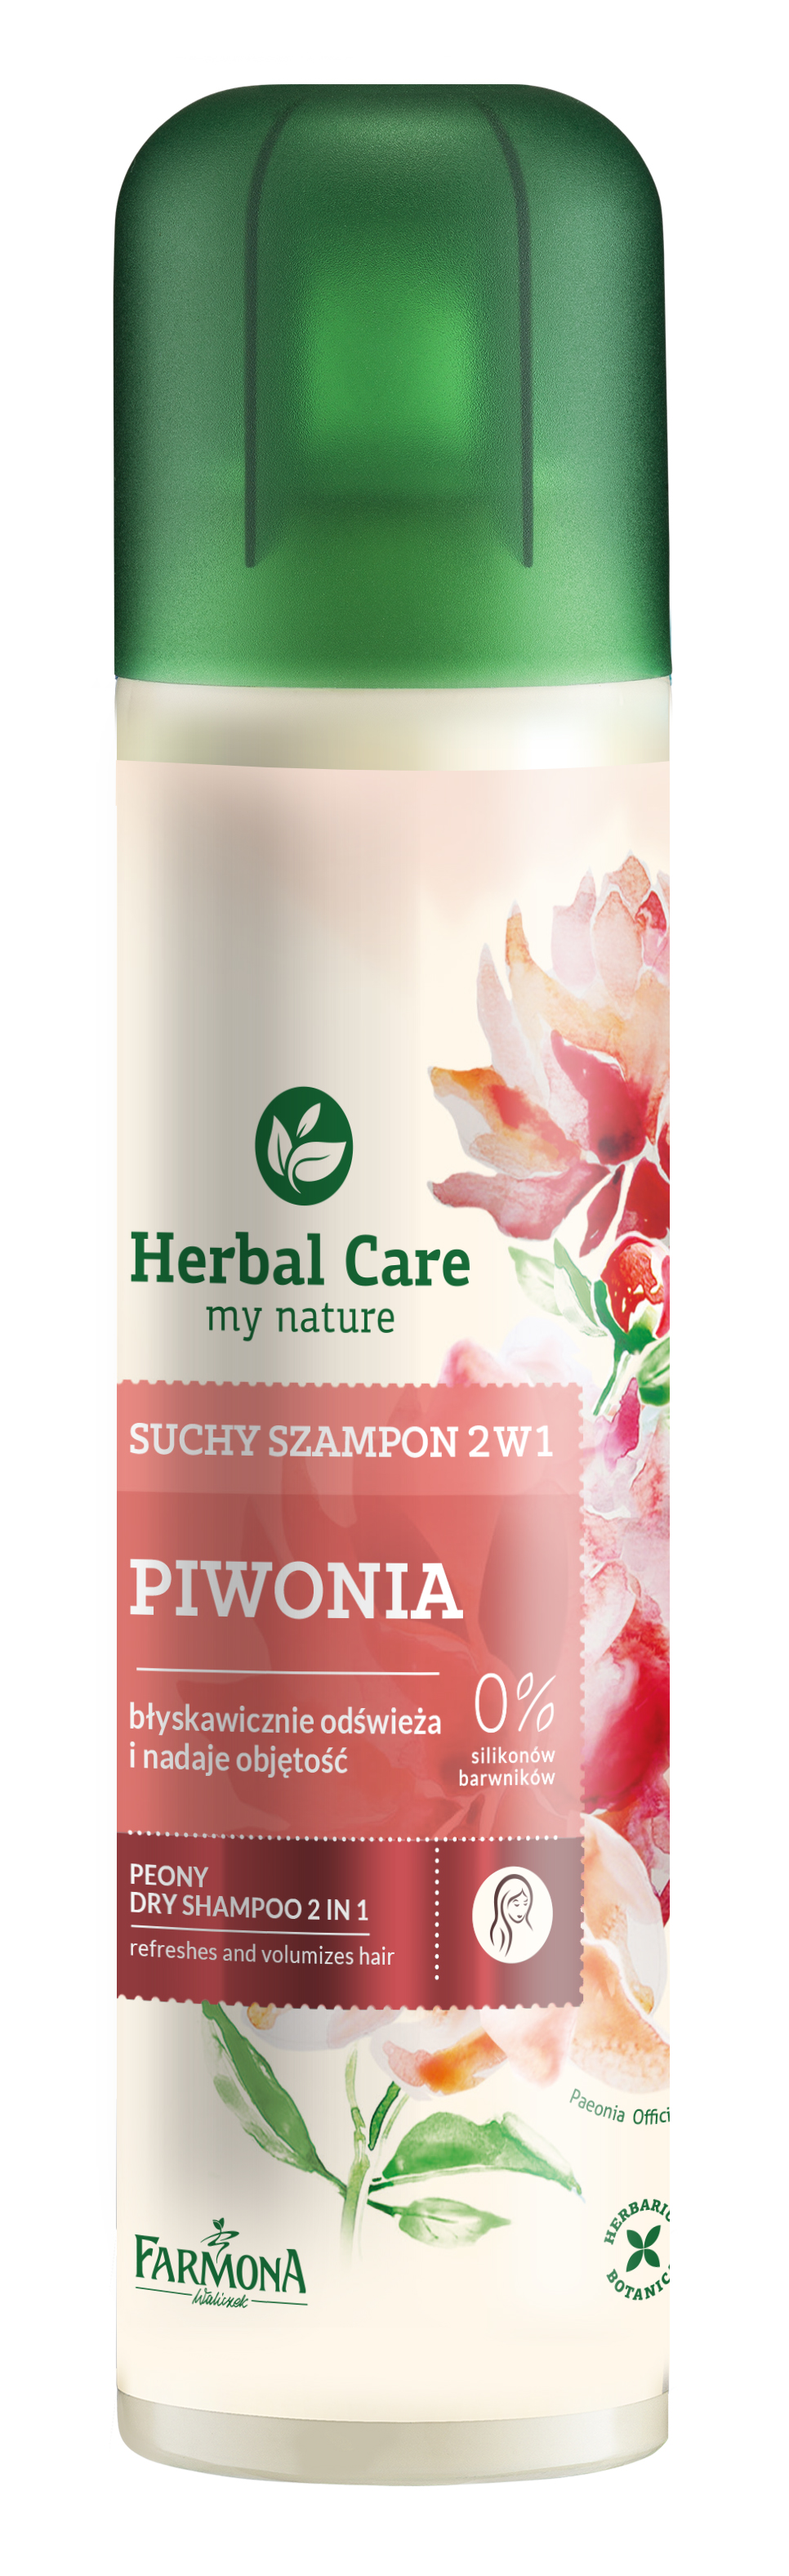 herbal care suchy szampon piwonia opinie